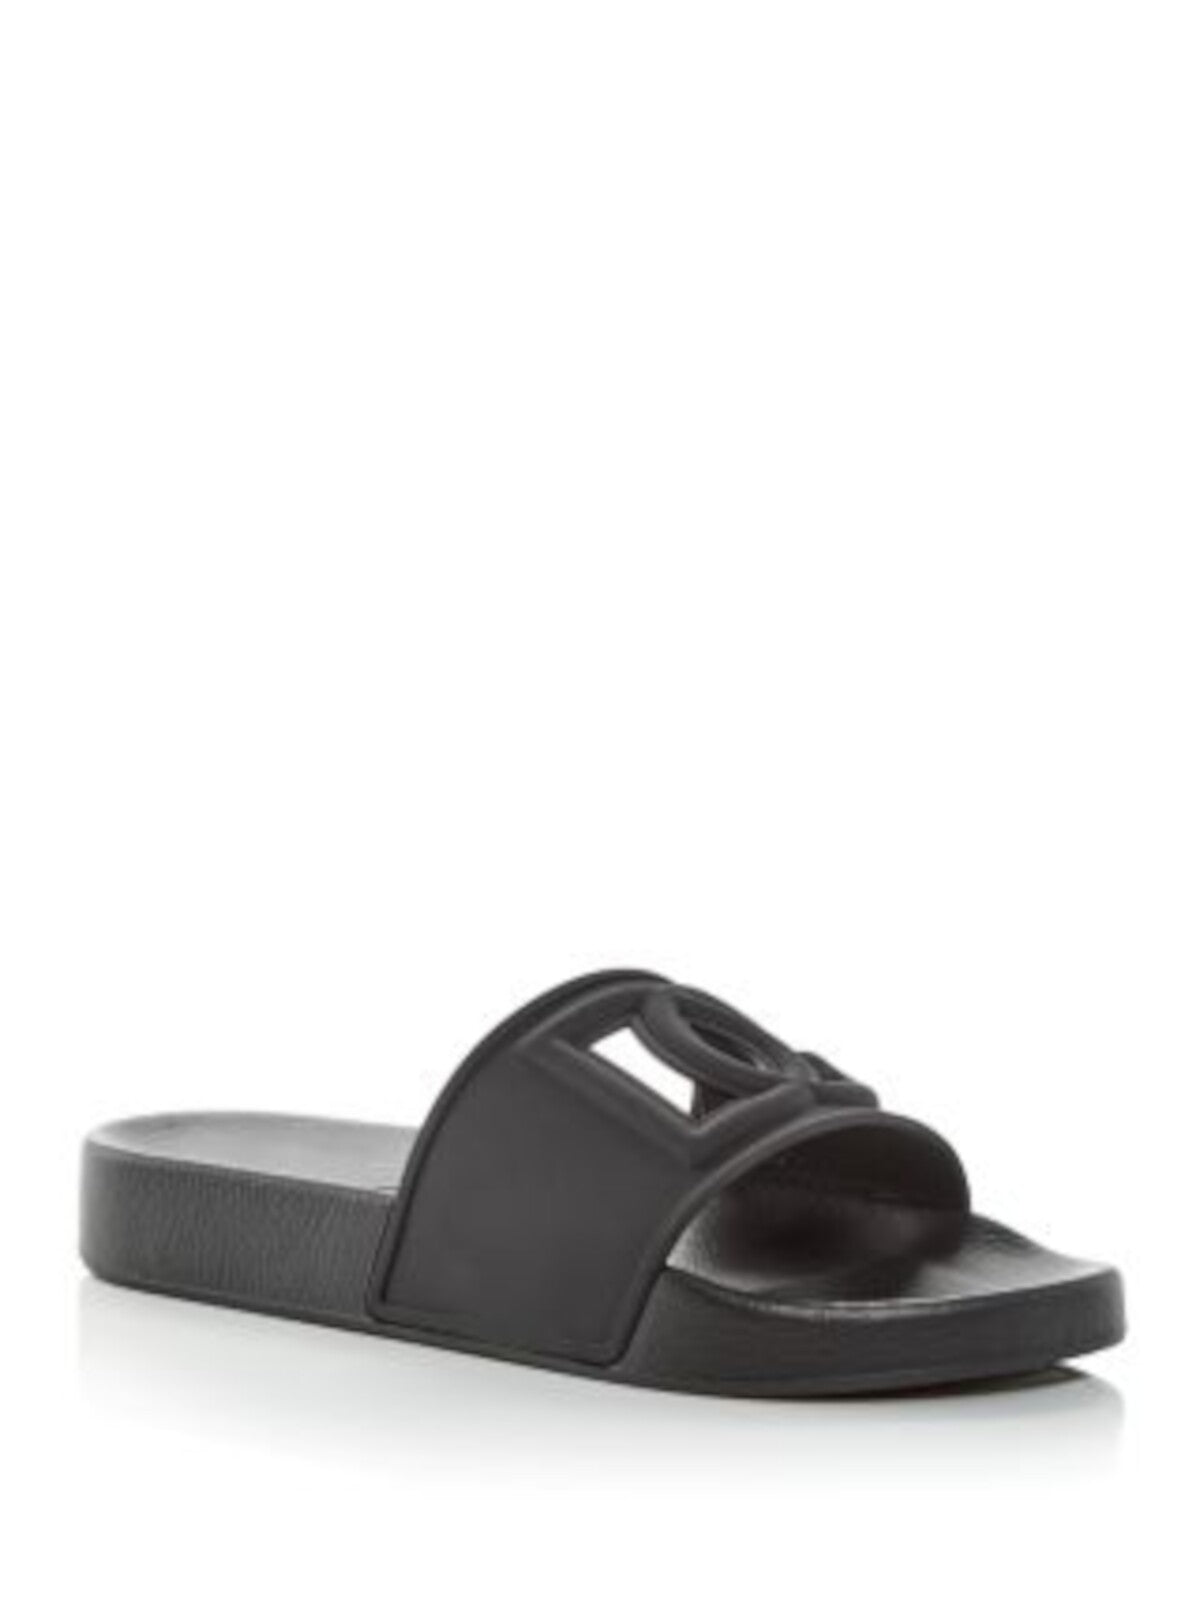 DOLCE & GABBANA Womens Black Cut Out Logo 20223 Round Toe Platform Slip On Slide Sandals Shoes 39